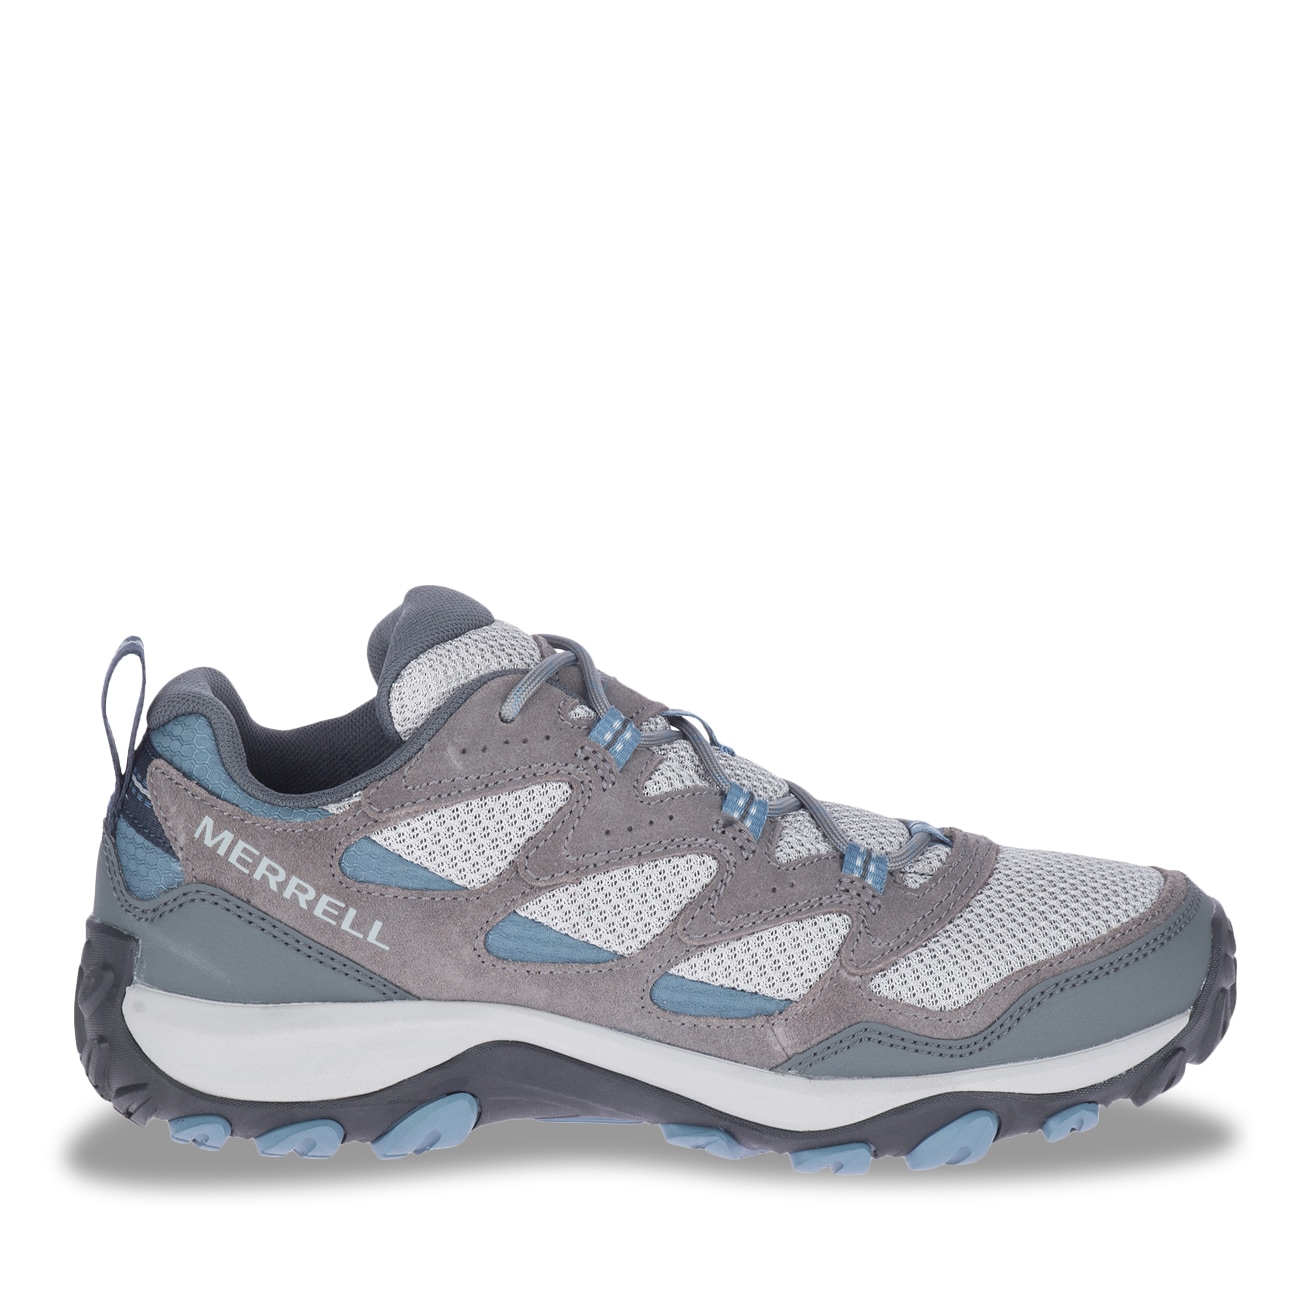 Merrell Shoes Womens 9 Sea Shore Blue Grey Hiking Athletic